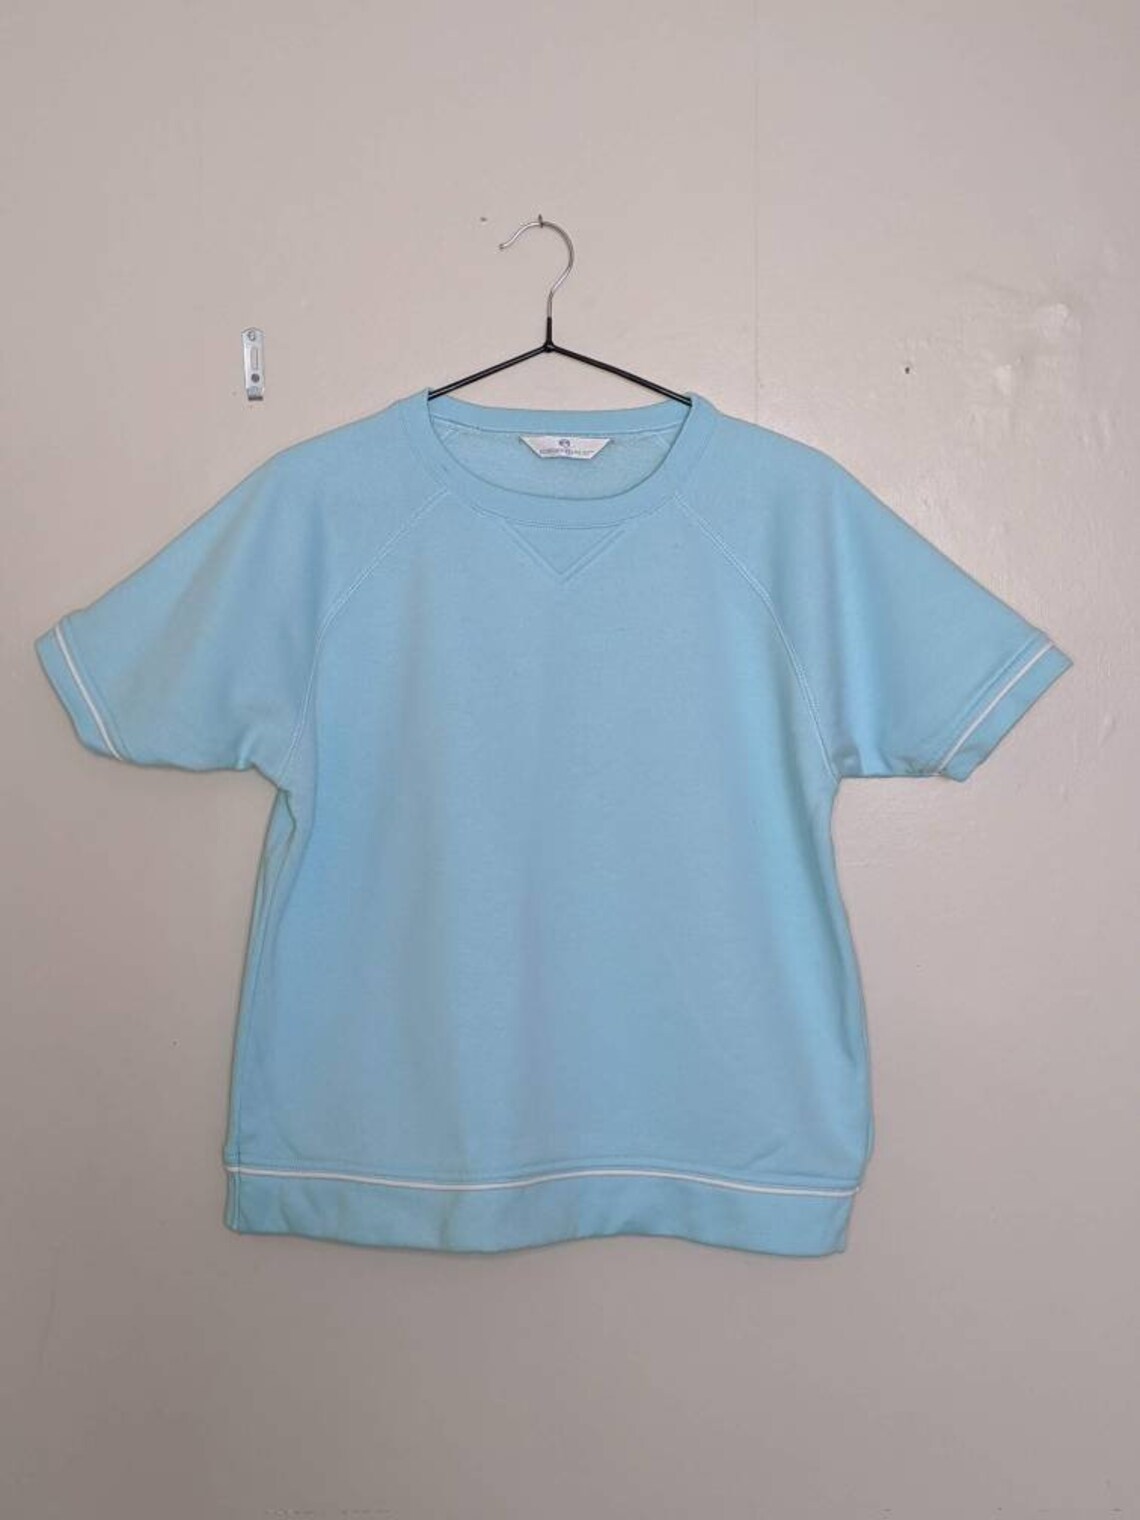 Vintage baby blue t shirt unisex vintage t shirt short | Etsy